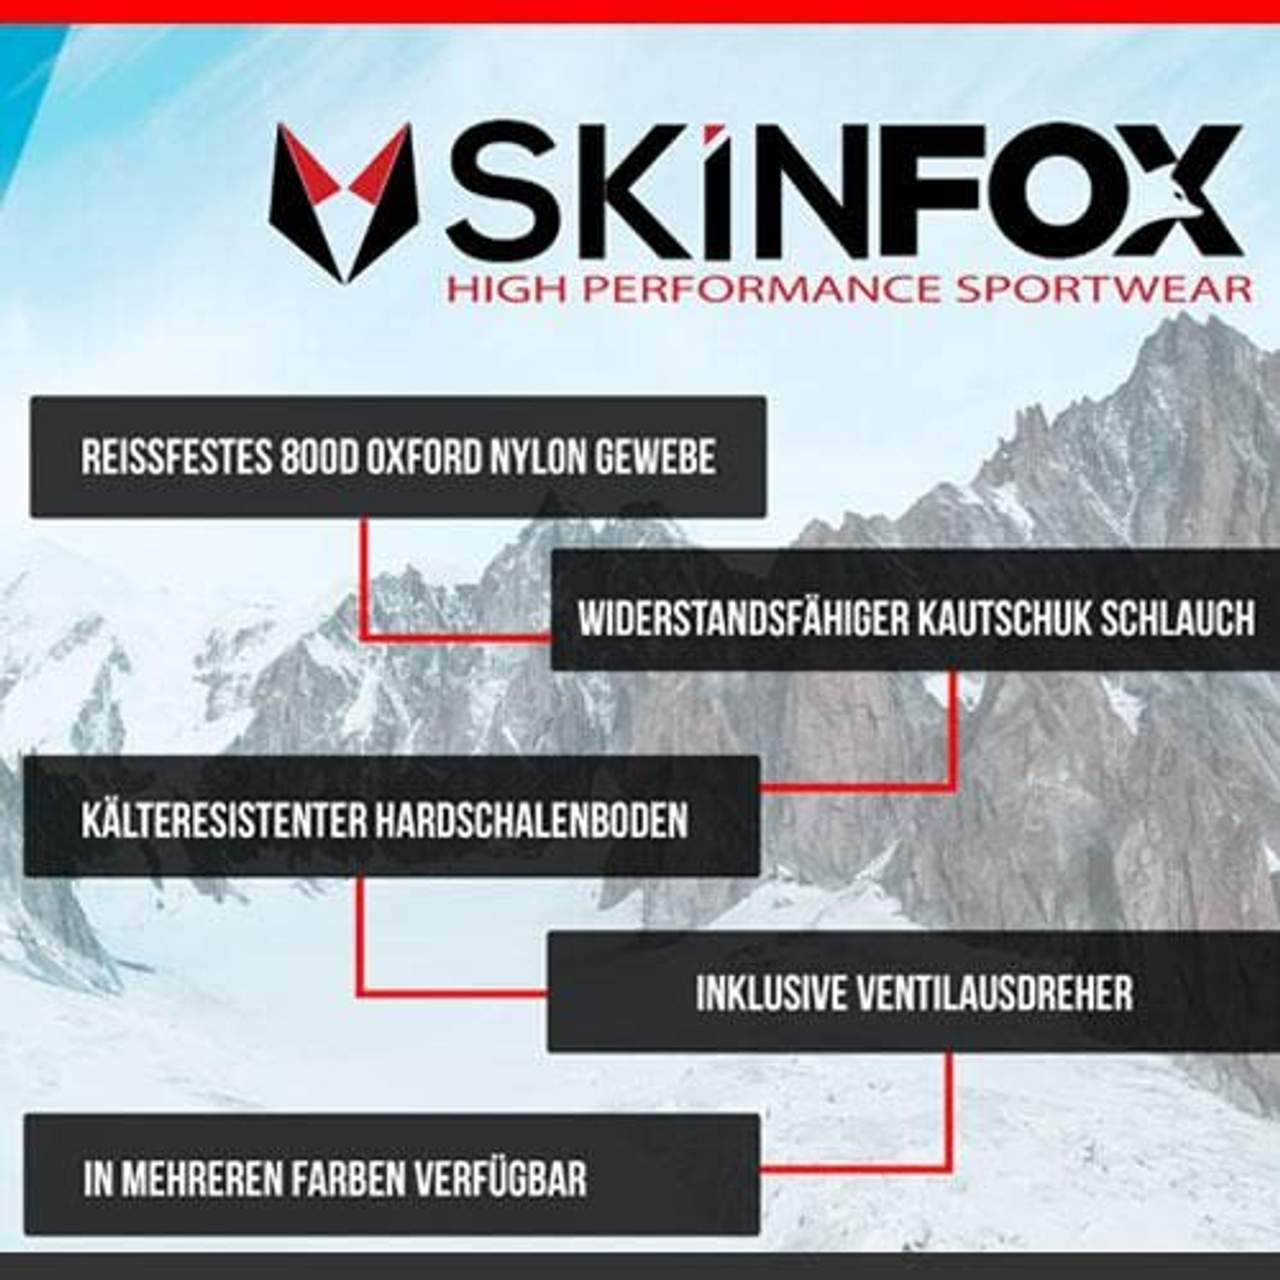 SKINFOX Snowtube Ø 100cm